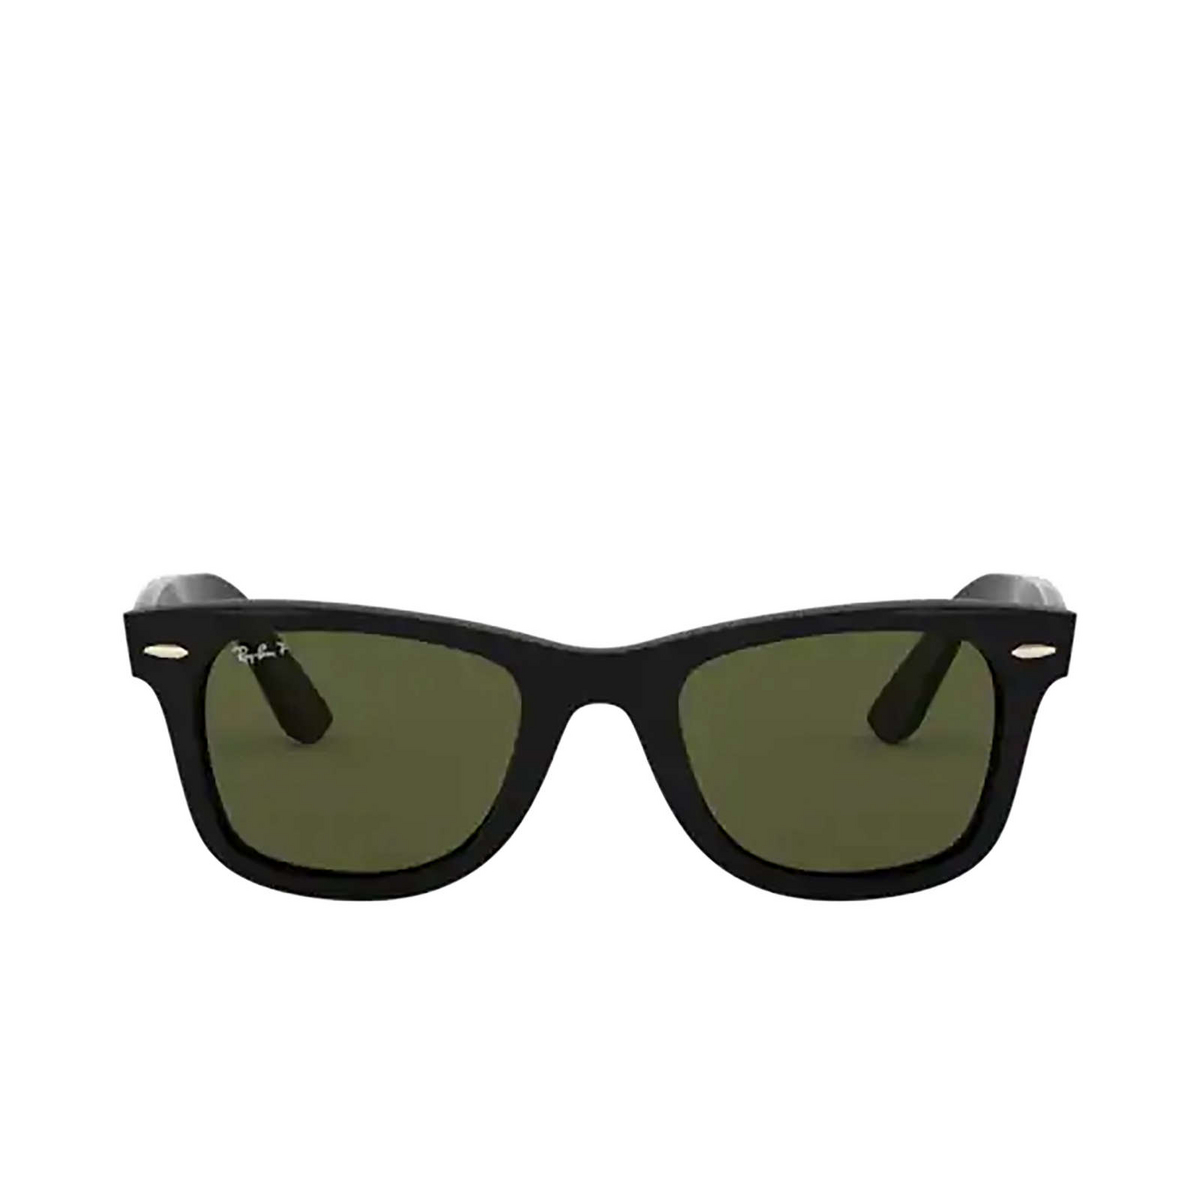 Ray-Ban WAYFARER Sunglasses 601/58 Black - front view